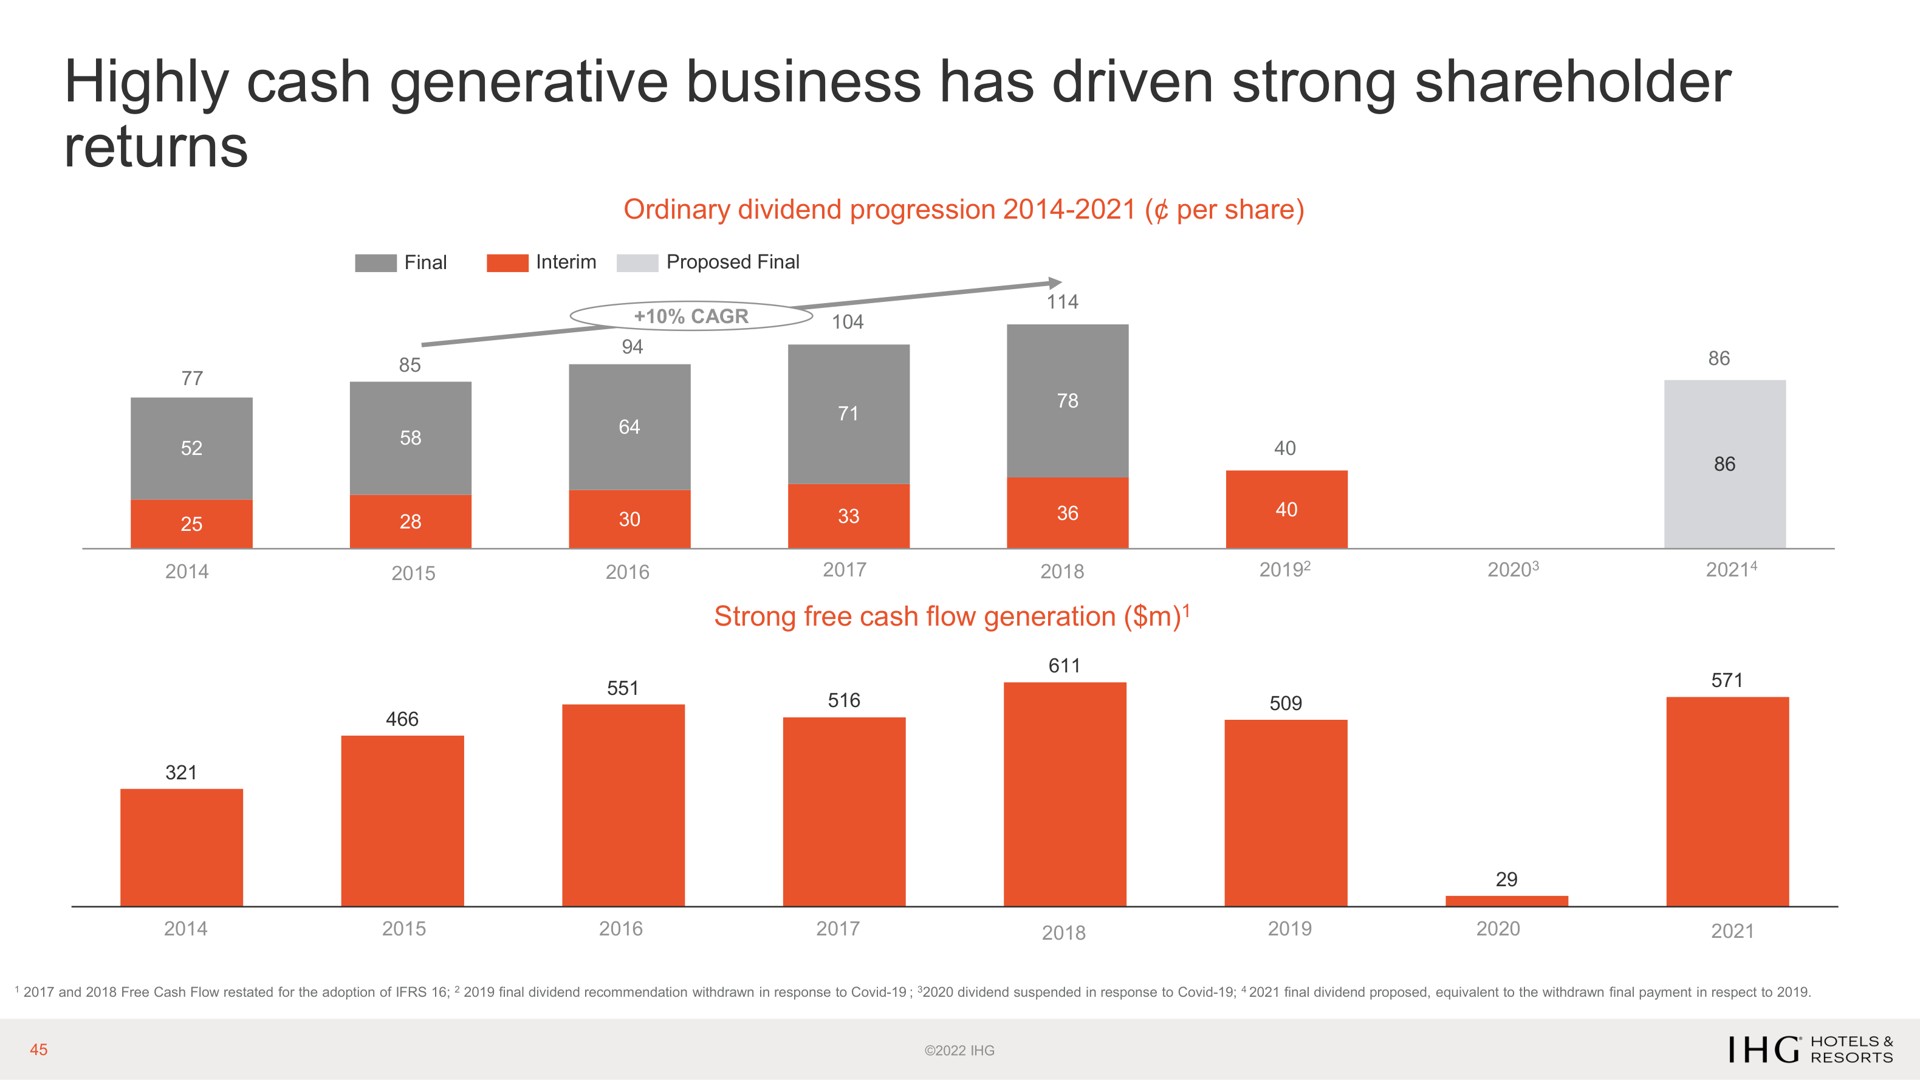 highly cash generative business has driven strong shareholder returns | IHG Hotels